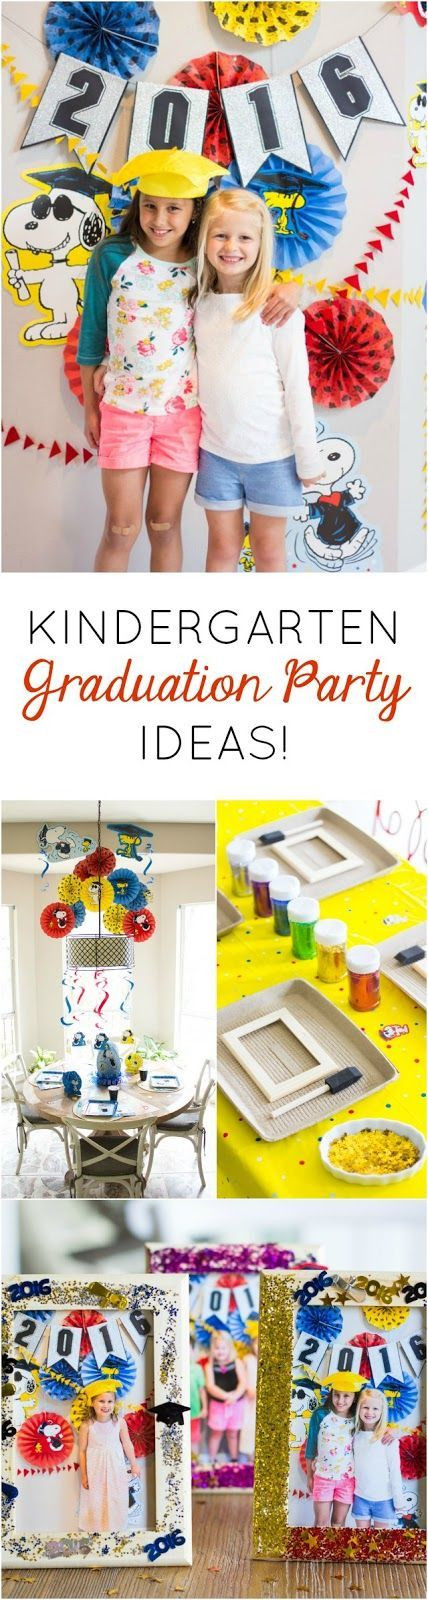 Kindergarten Graduation Party Ideas
 31 best End of Year Activities images on Pinterest